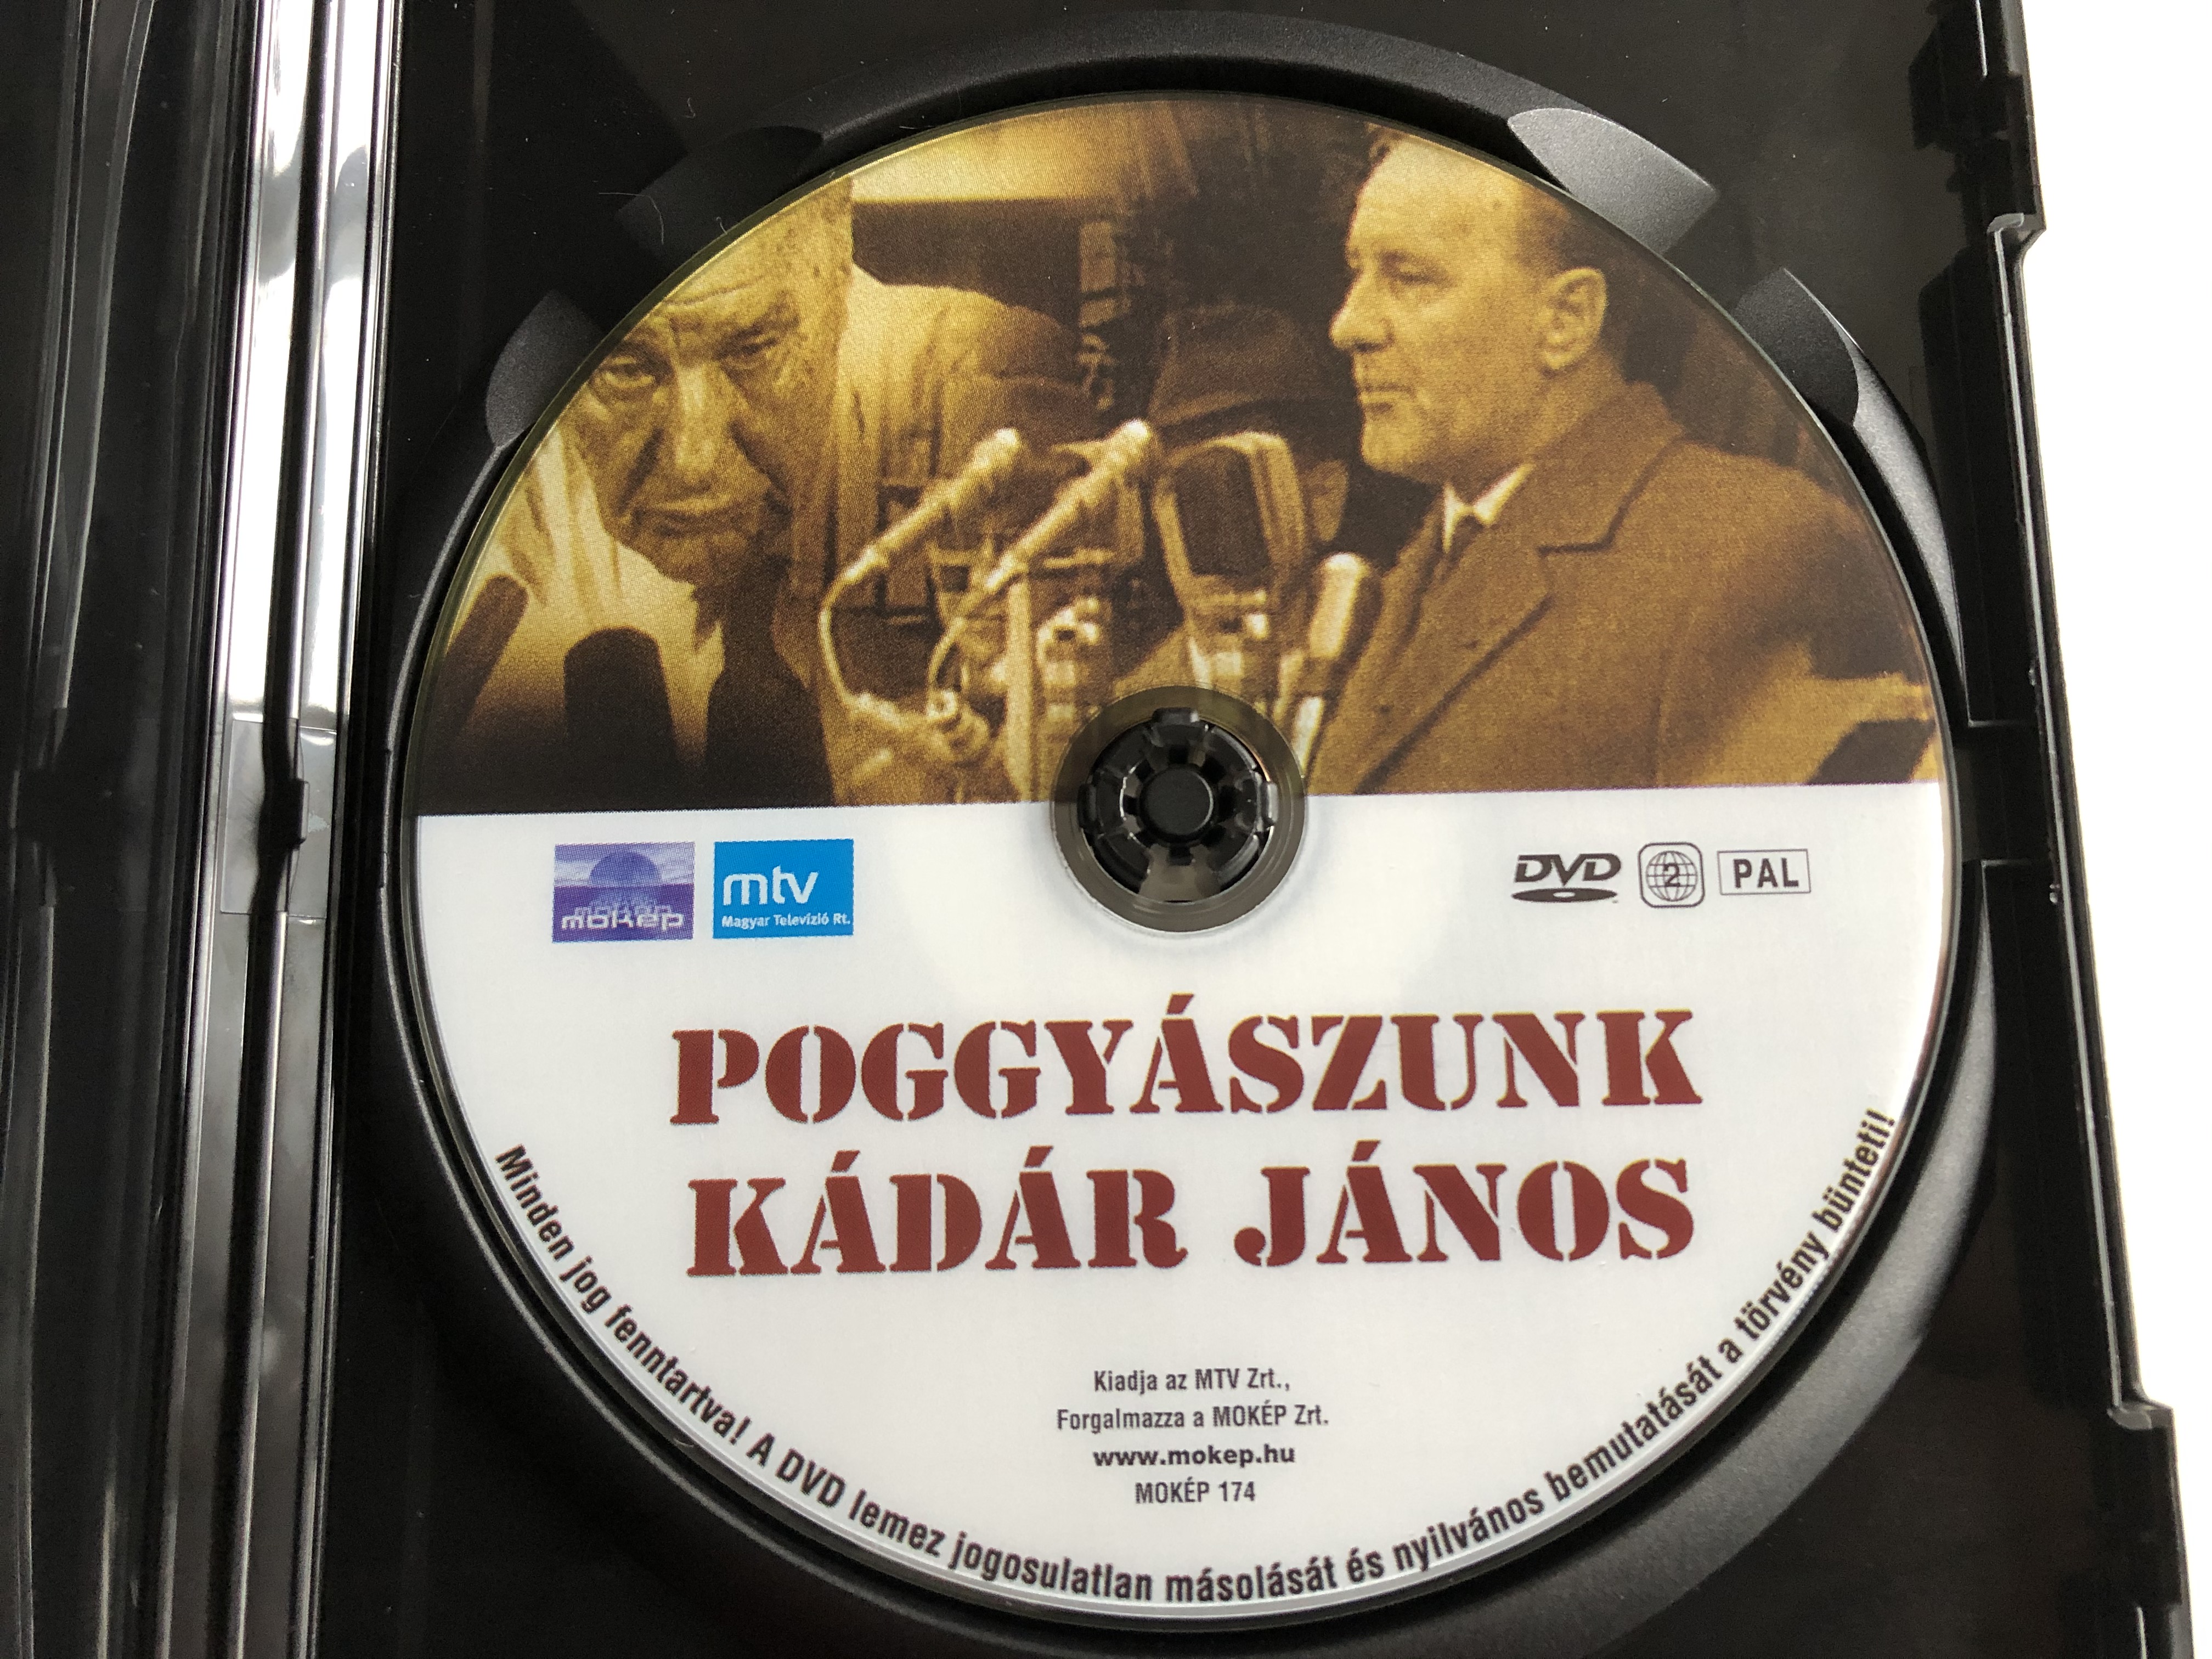 poggy-szunk-k-d-r-j-nos-dvd-2008-2.jpg